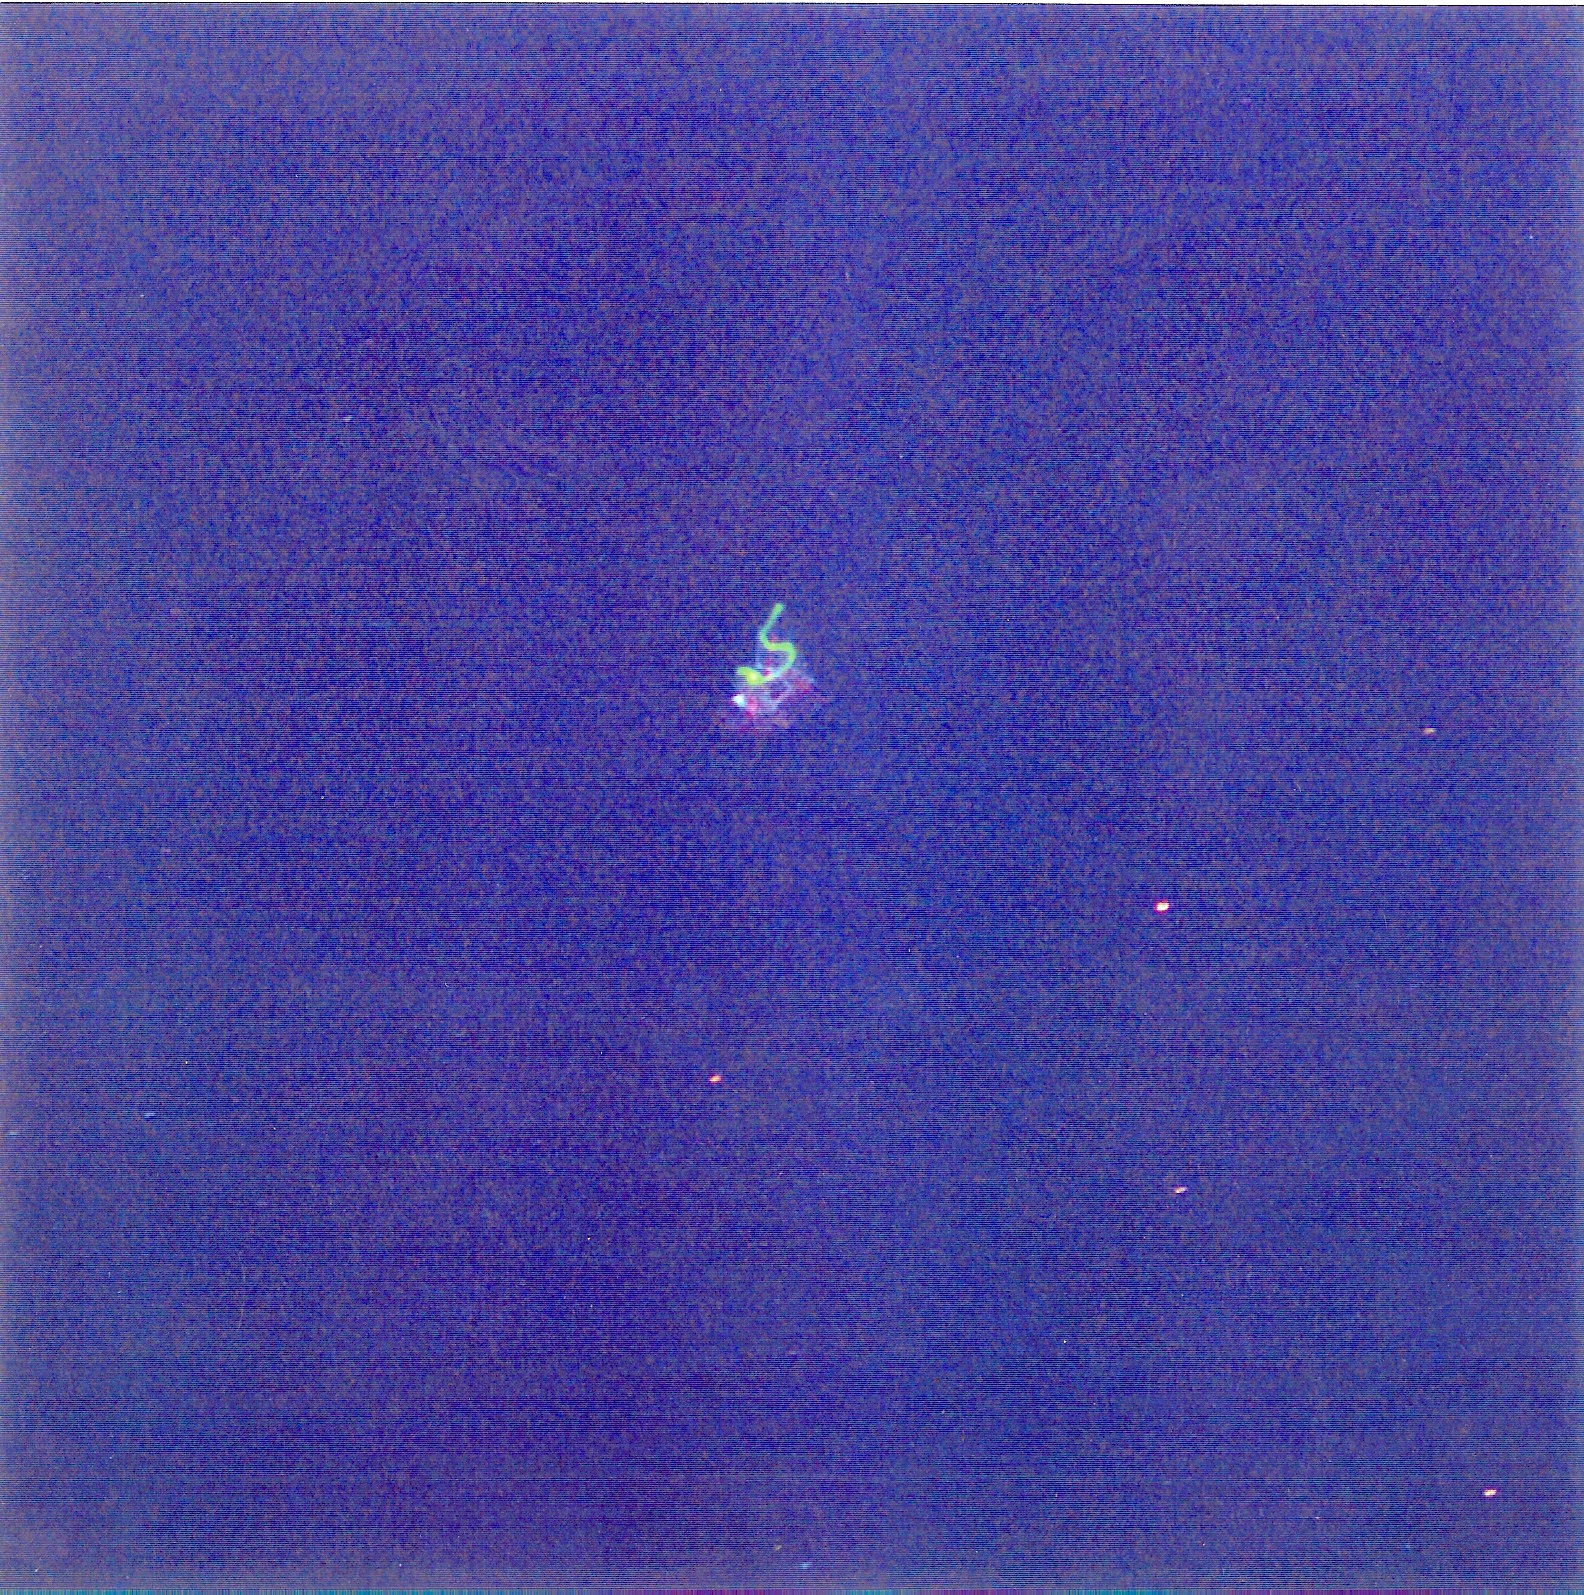 Stephensville Ship over Long Lake circa 2000 #2